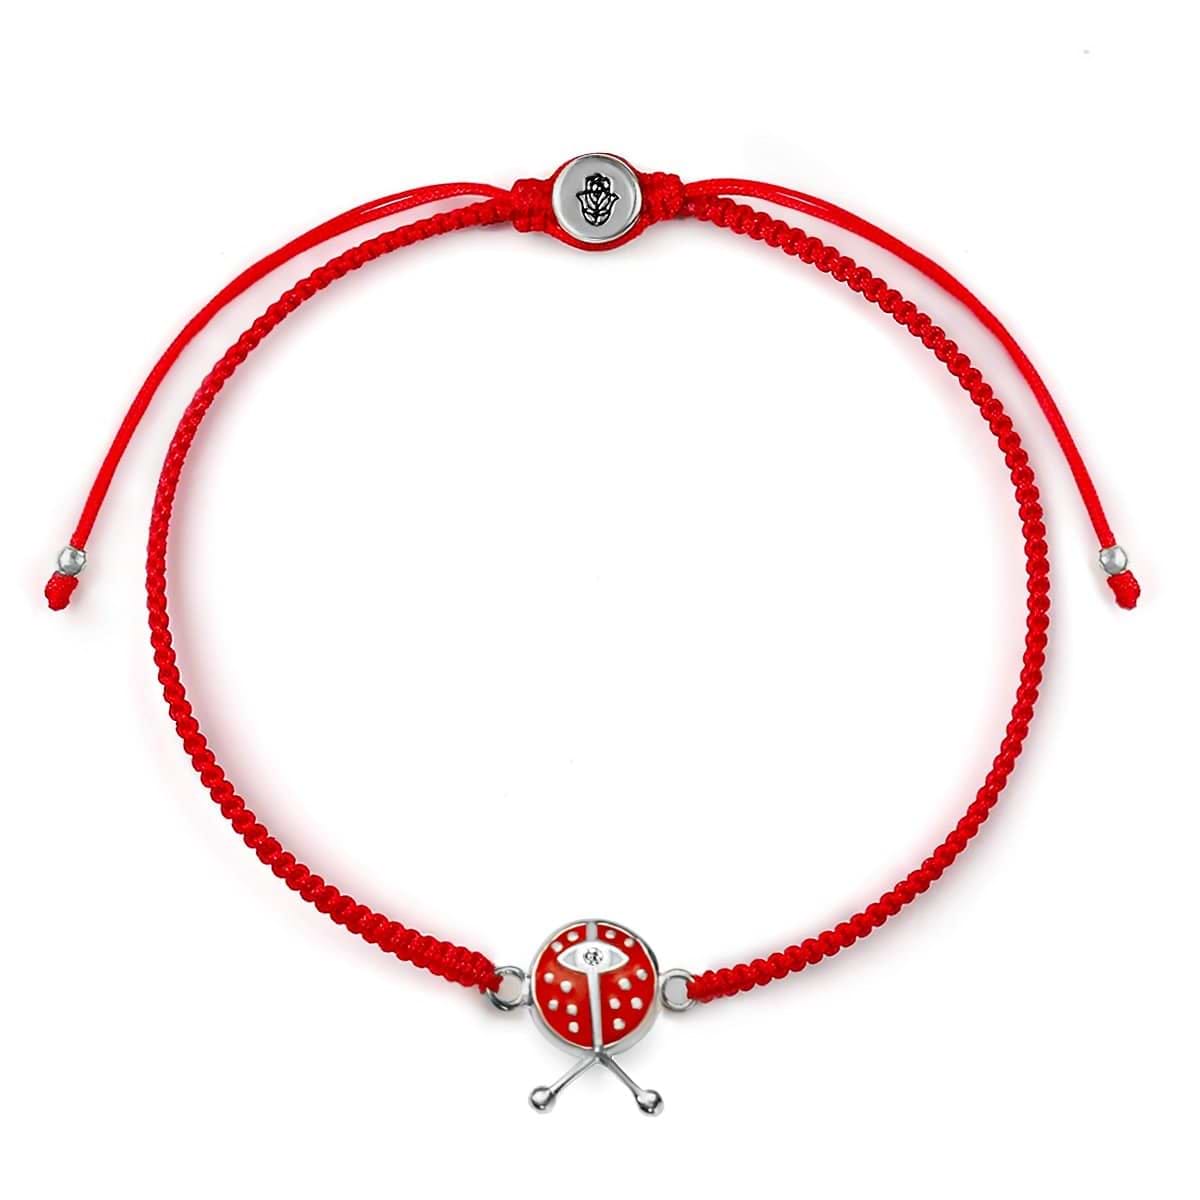 Karma and Luck  Bracelet  -  Vibrant Luck Red String Ladybug Charm Bracelet